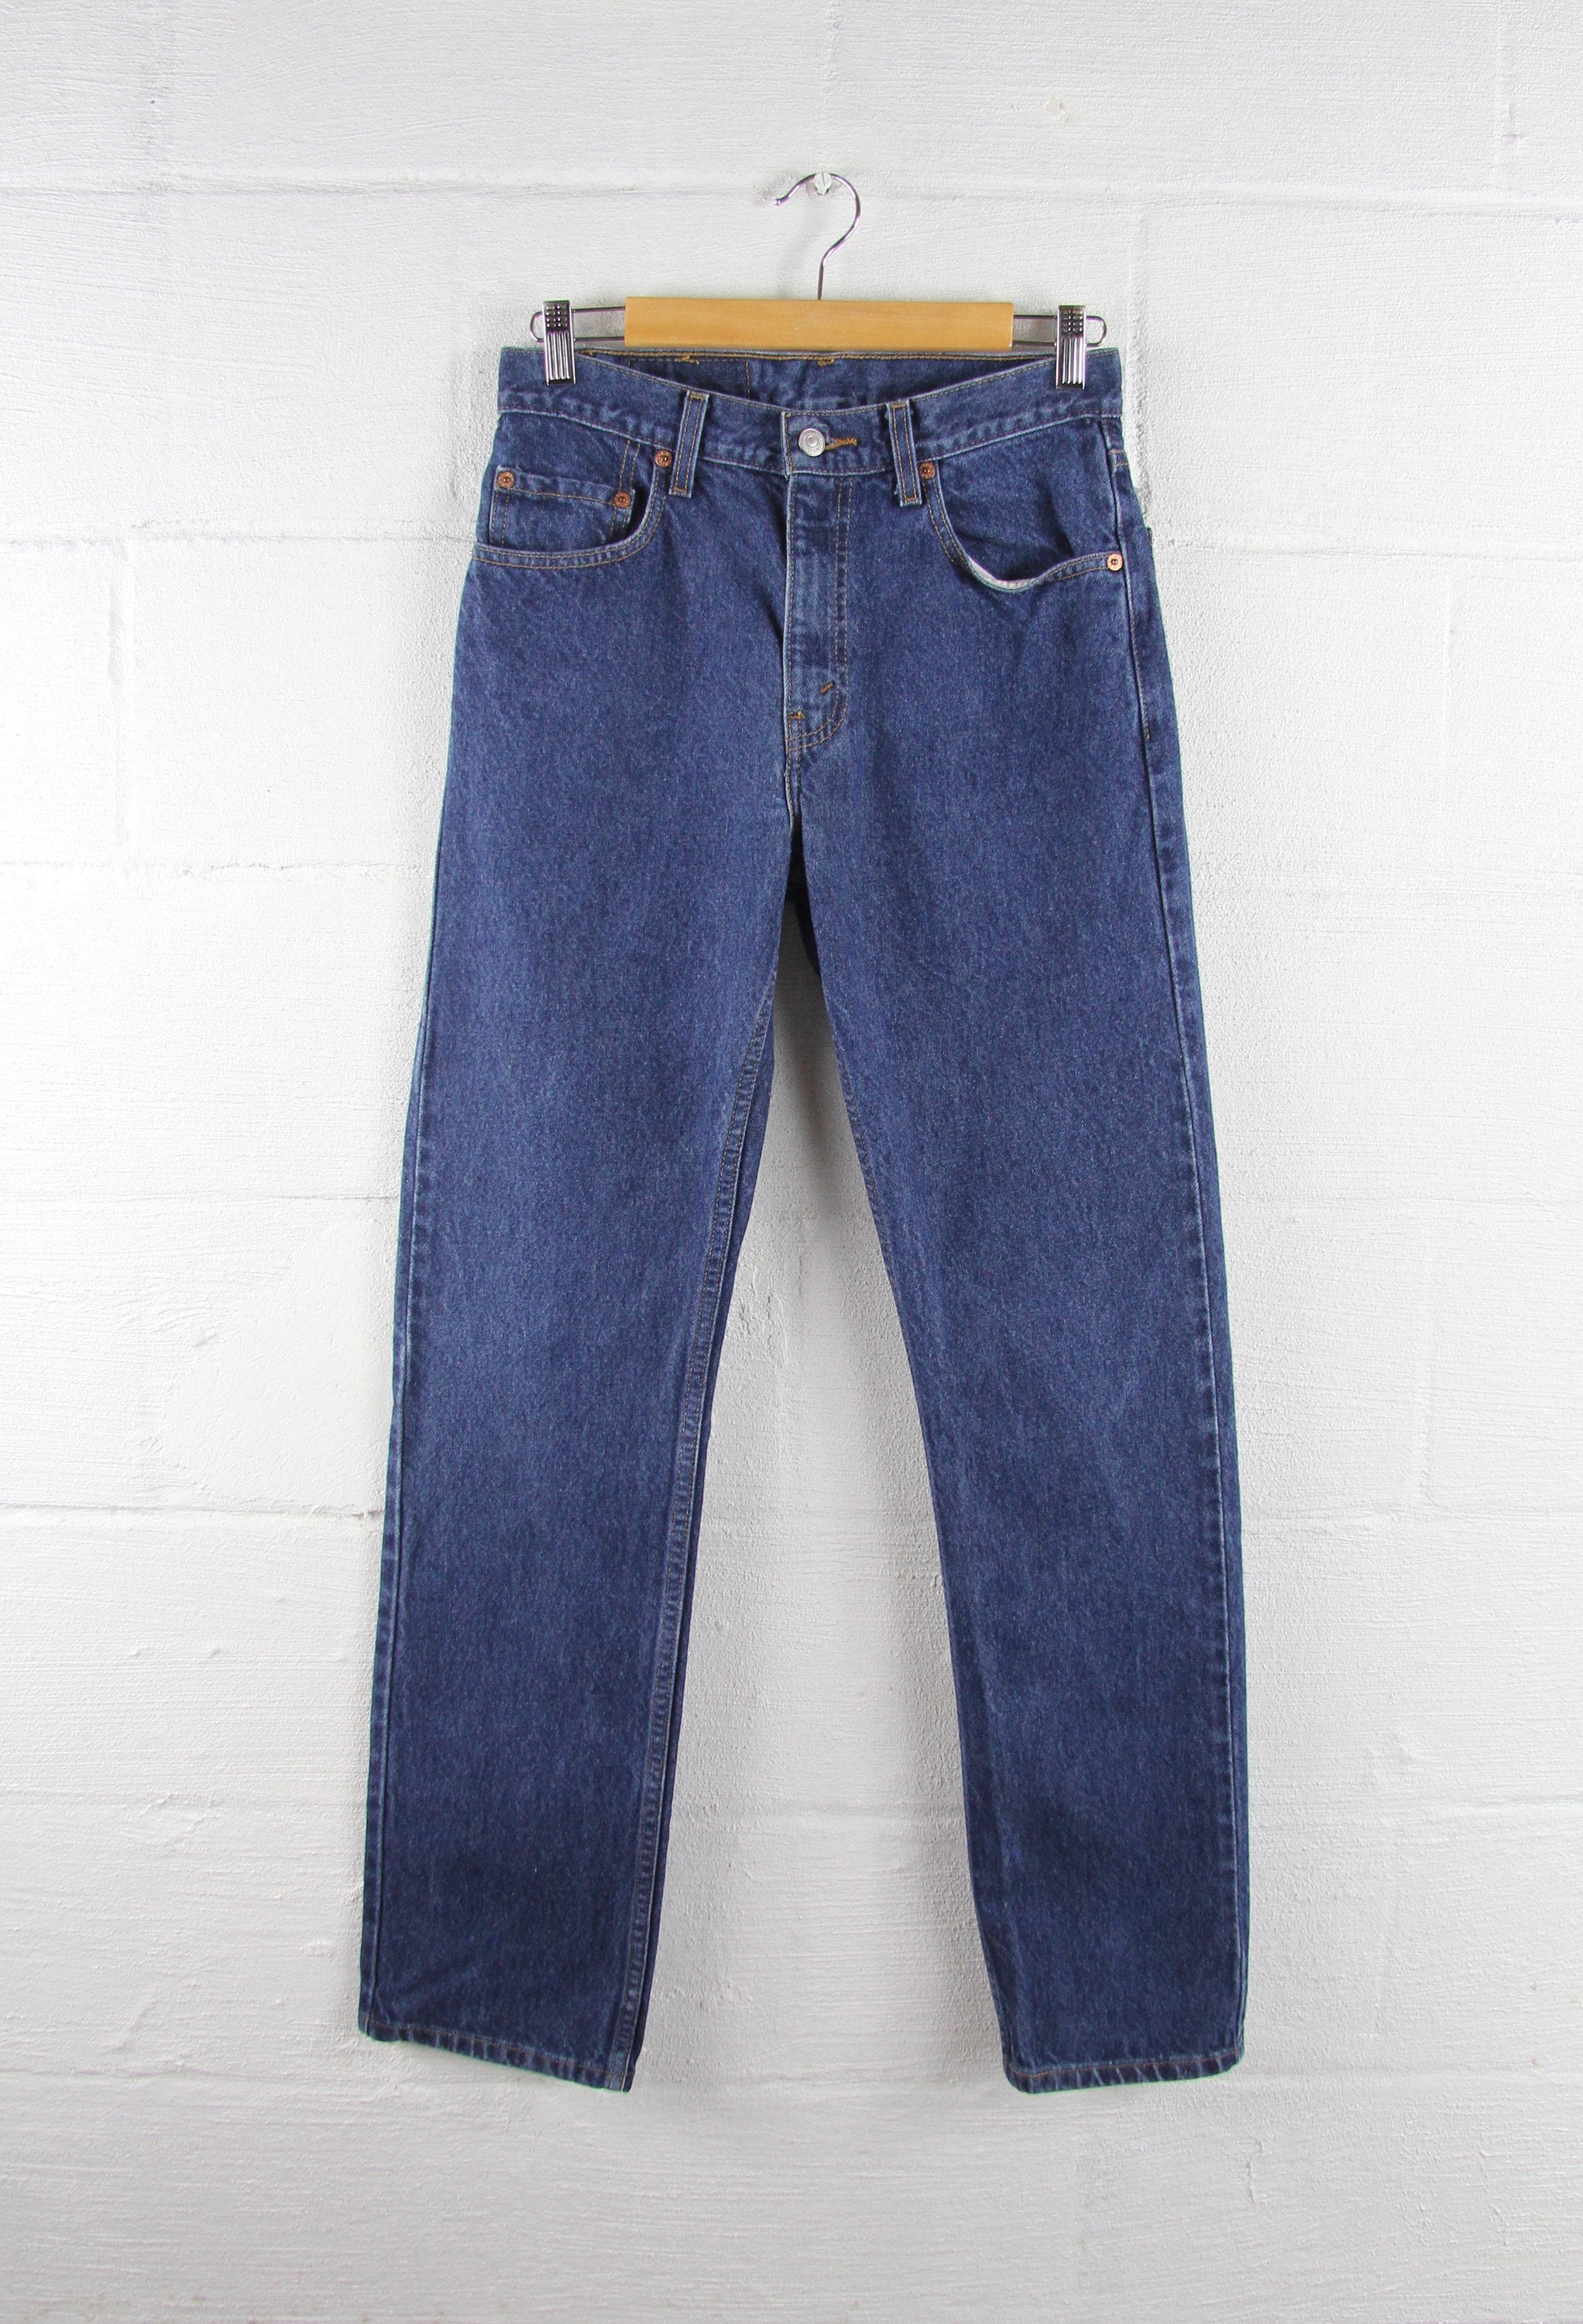 Vintage Levi's Dark Wash Jeans 505 Straight Leg 29 x 32